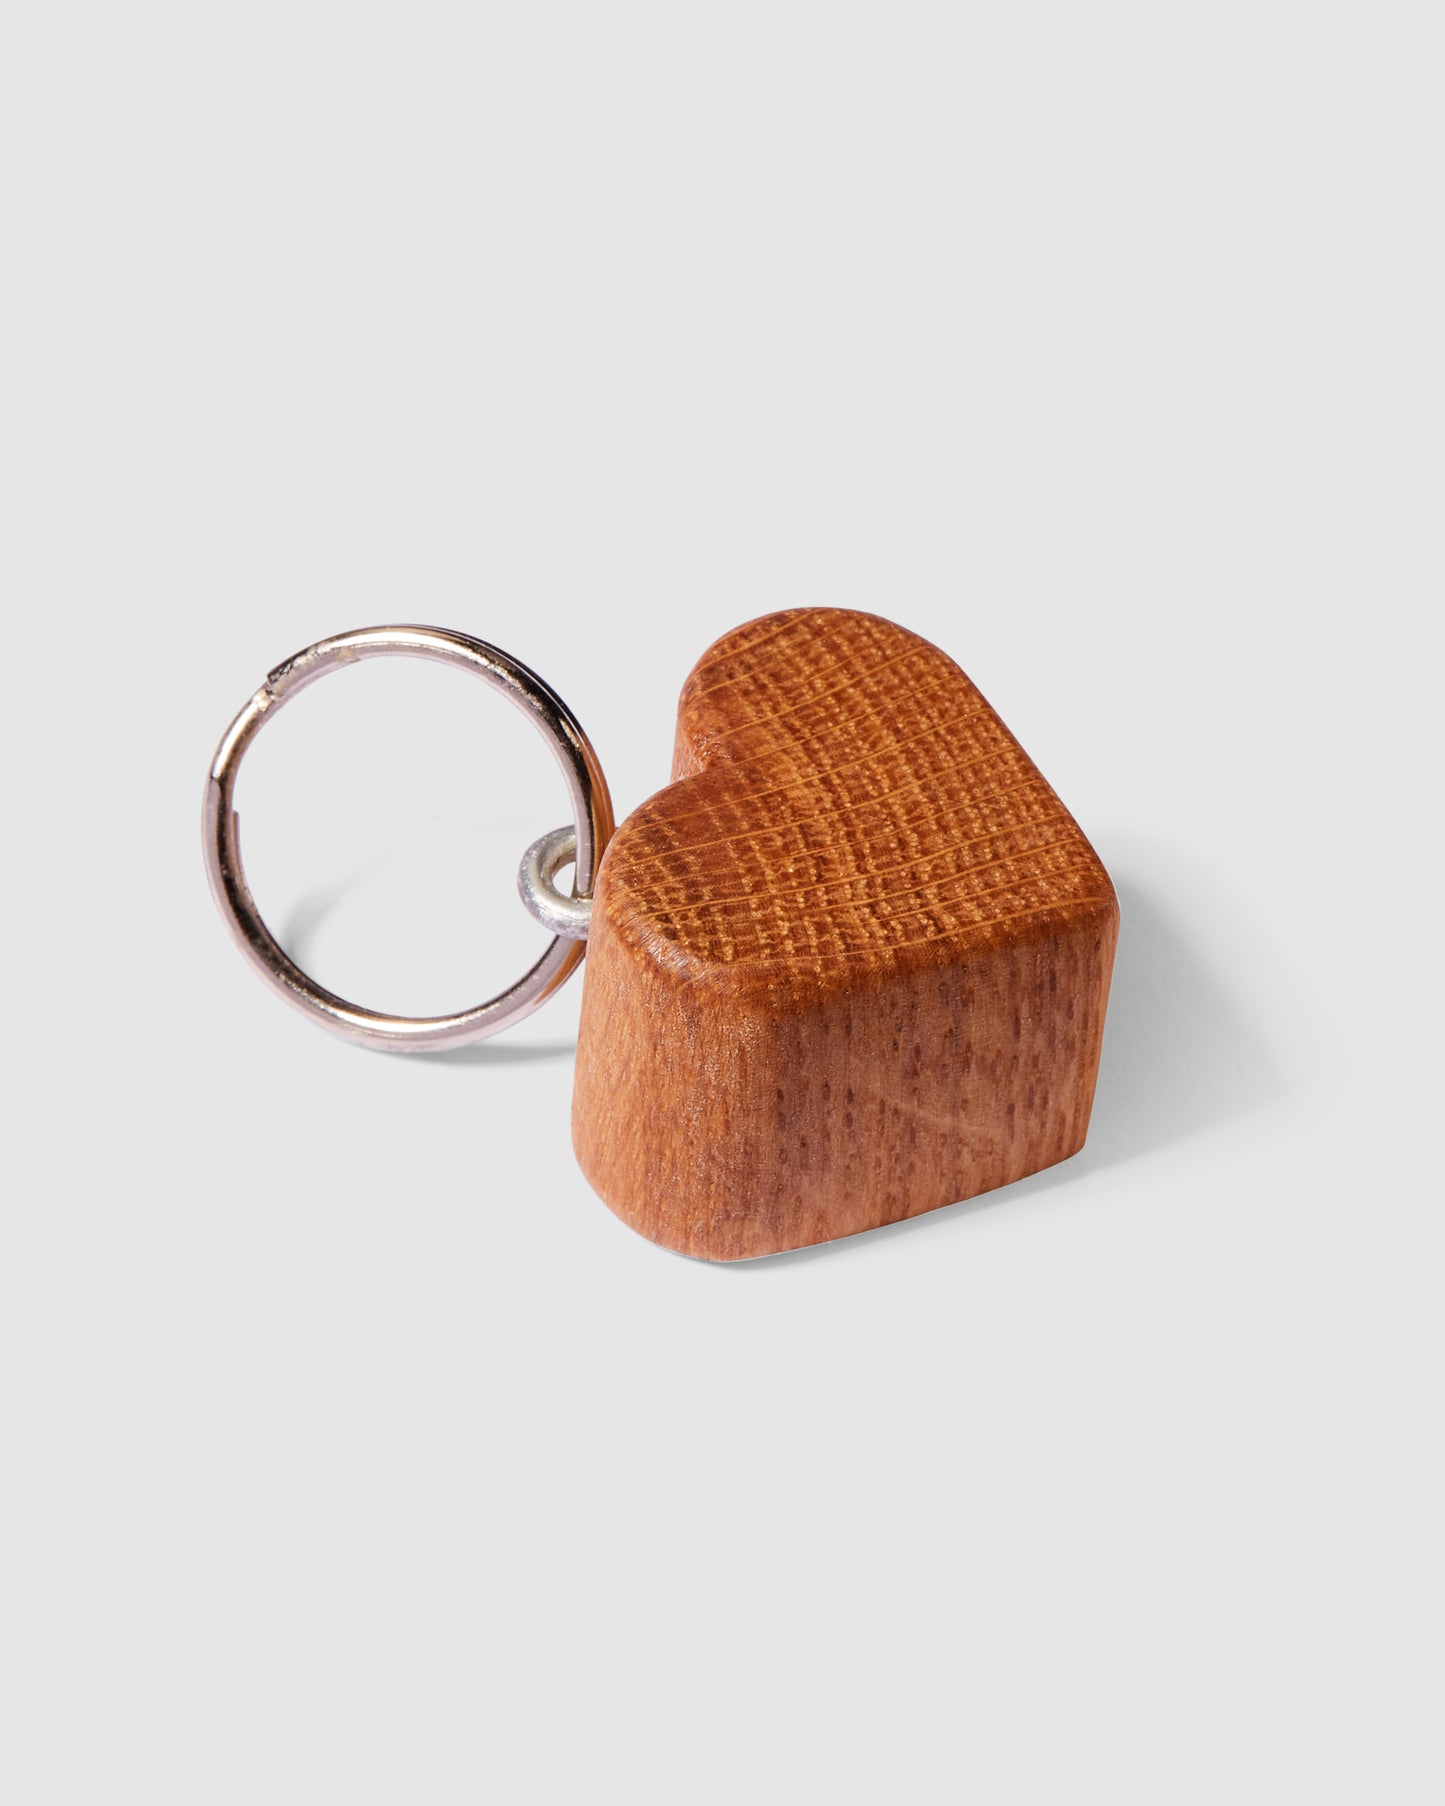 Holzherzen Schlüsselanhänger aus Kirschholz, seitlich fotografiert